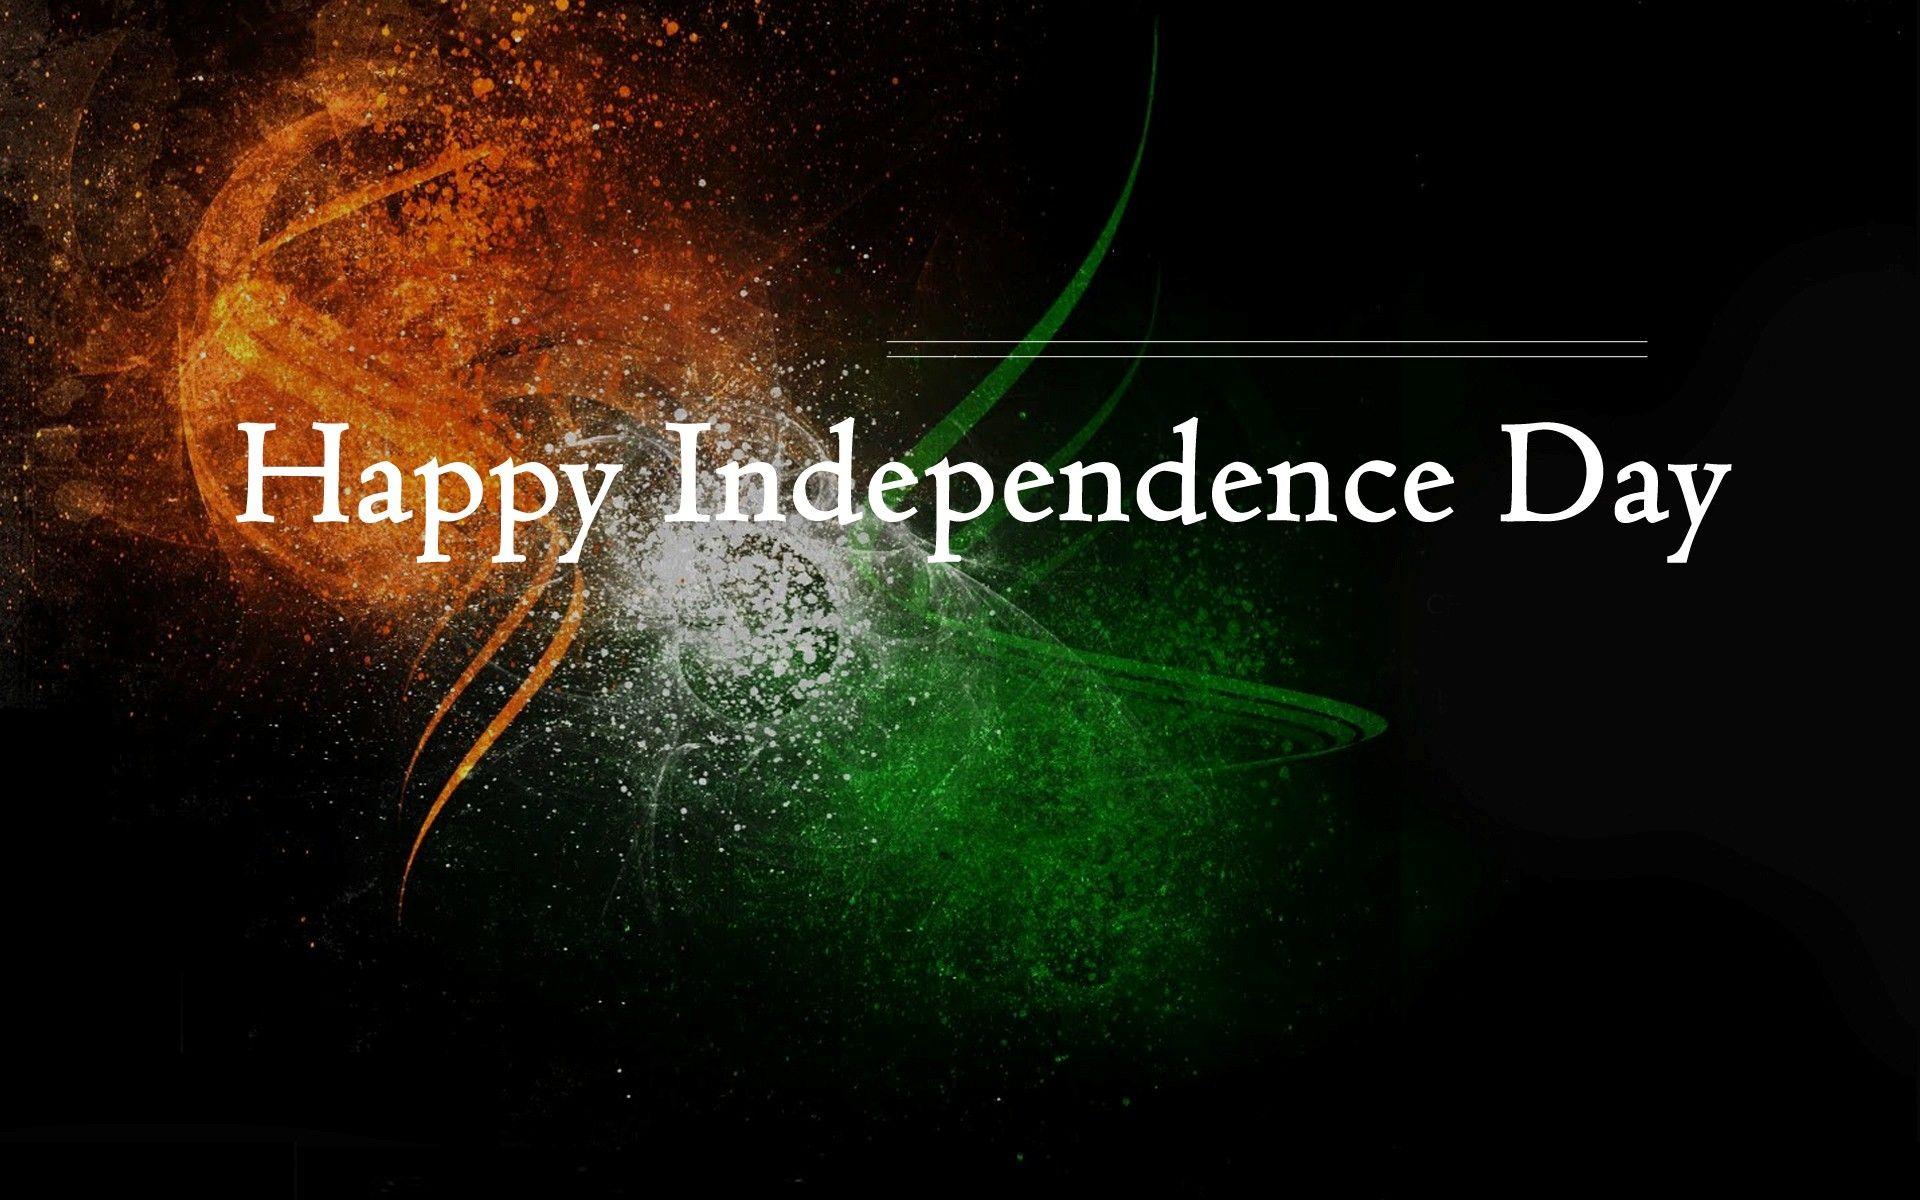 Happy Independence Day Desktop Image Background